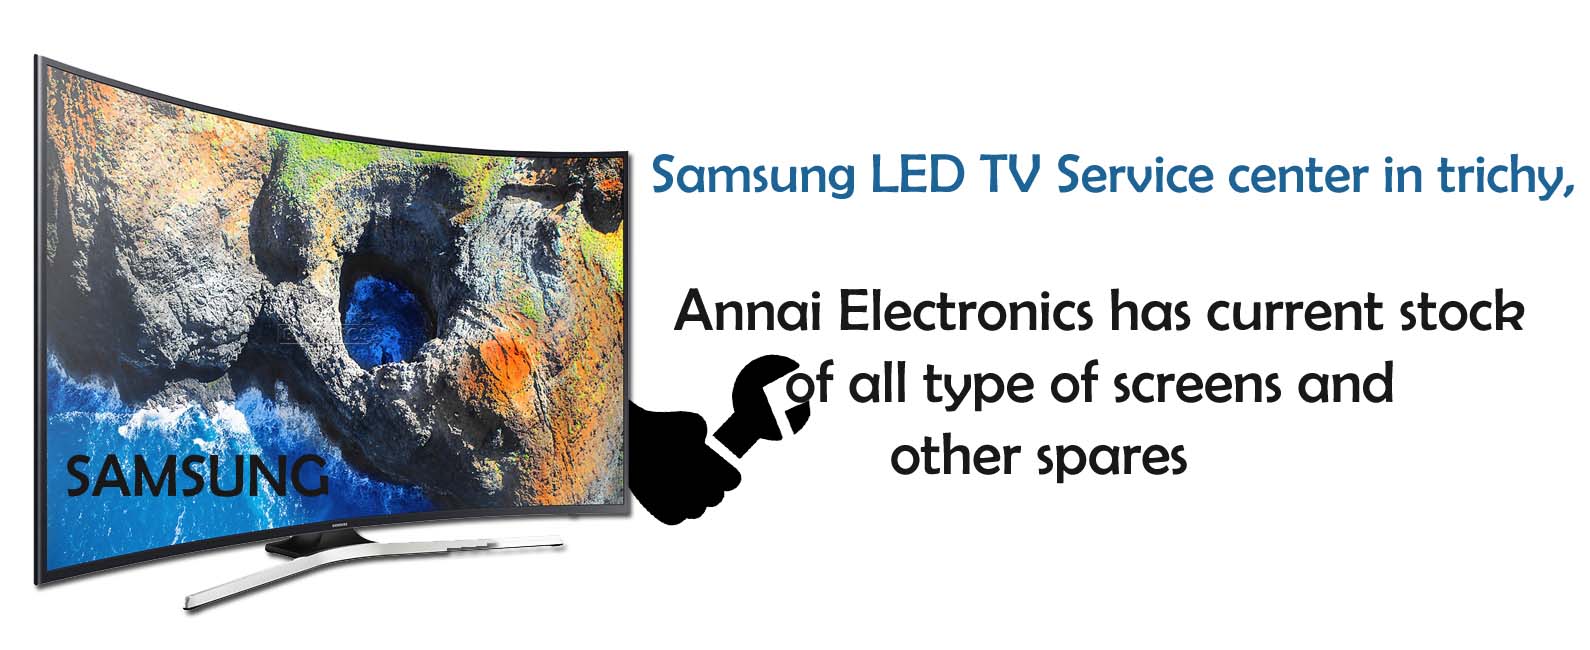 ANNAI ELECTRONICS-SAMSUNG LCD TV SERVICE